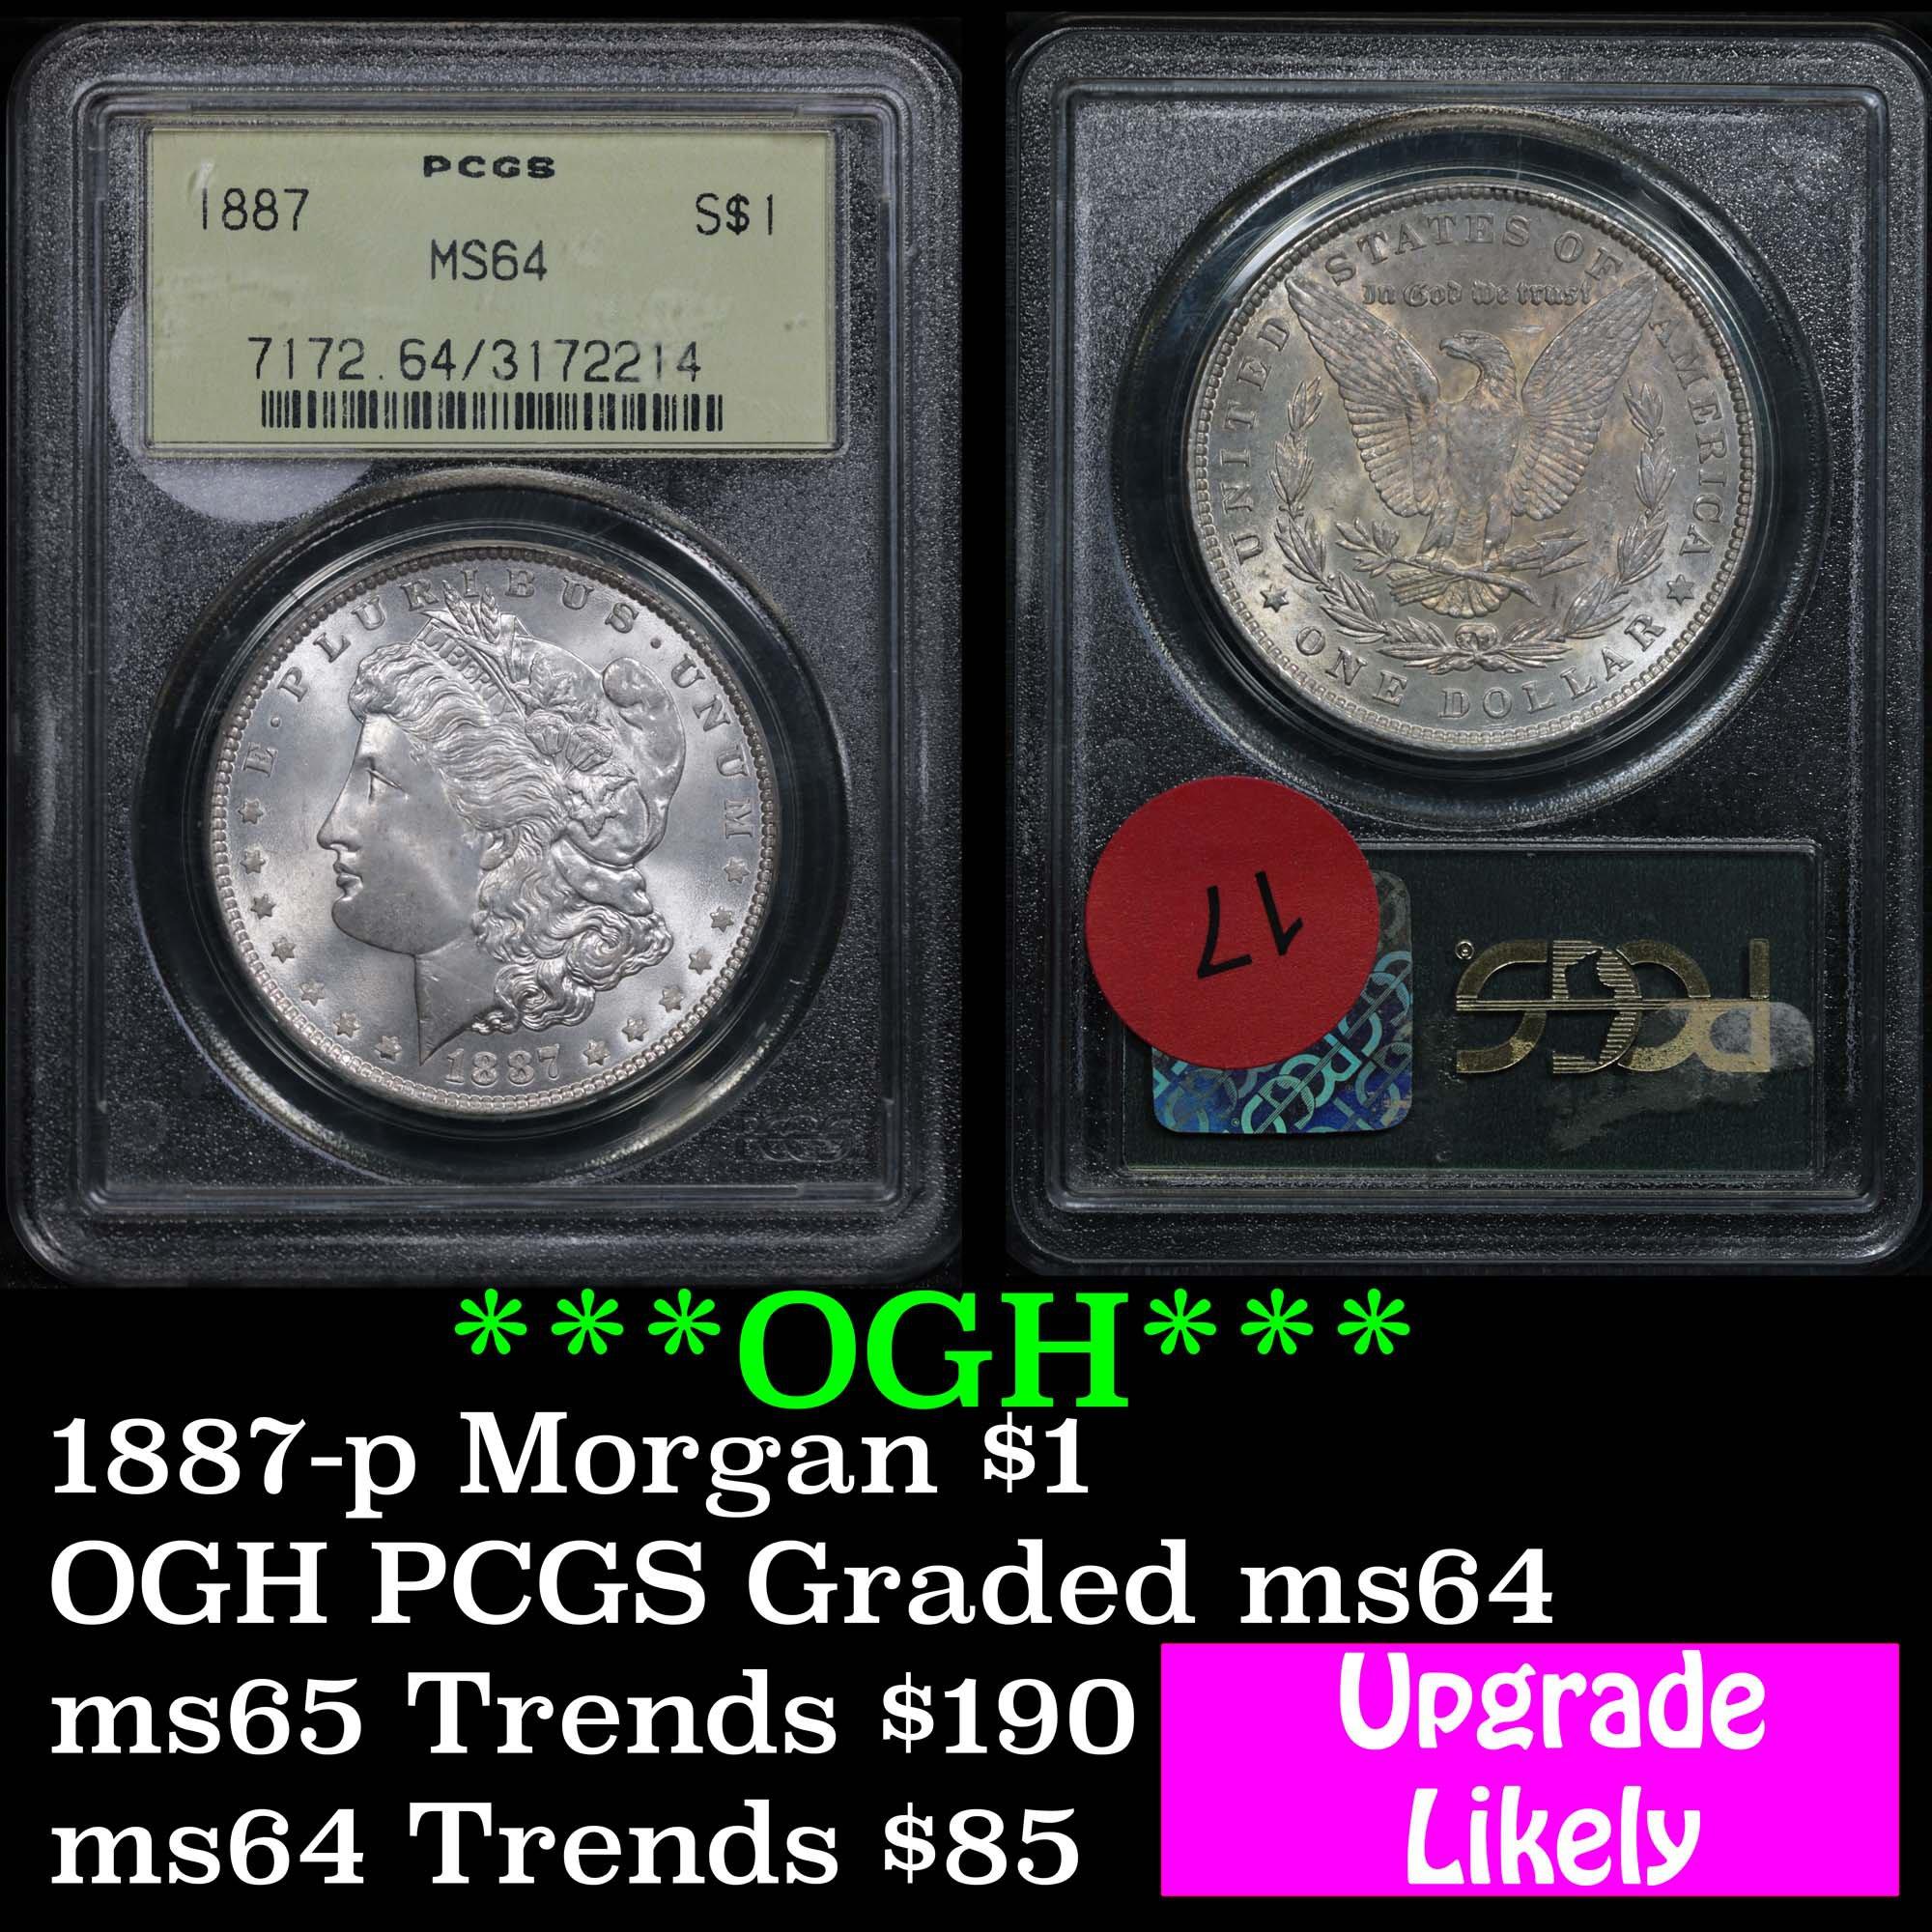 PCGS 1887-p Morgan Dollar $1 Graded ms64 by PCGS